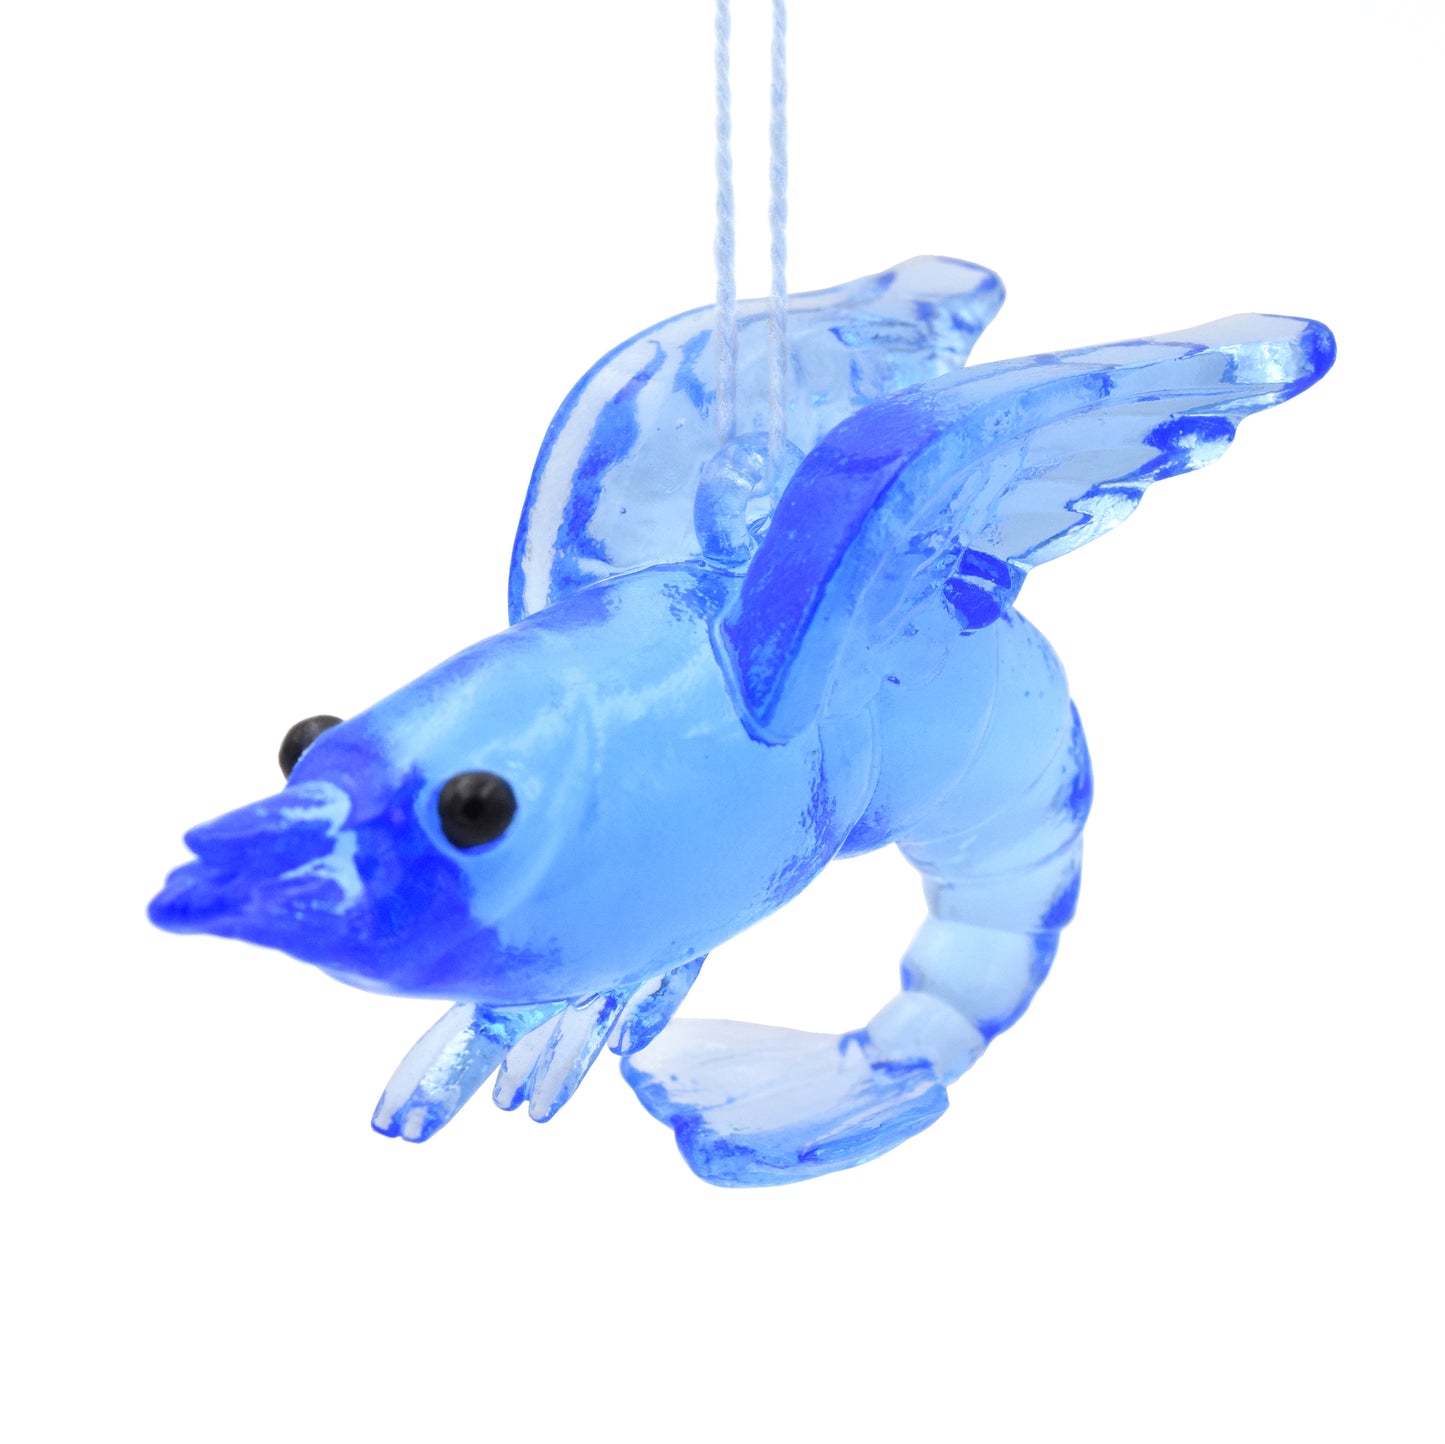  A translucent blue shrimp ornament. The shrimp has wings and beady black eyes.